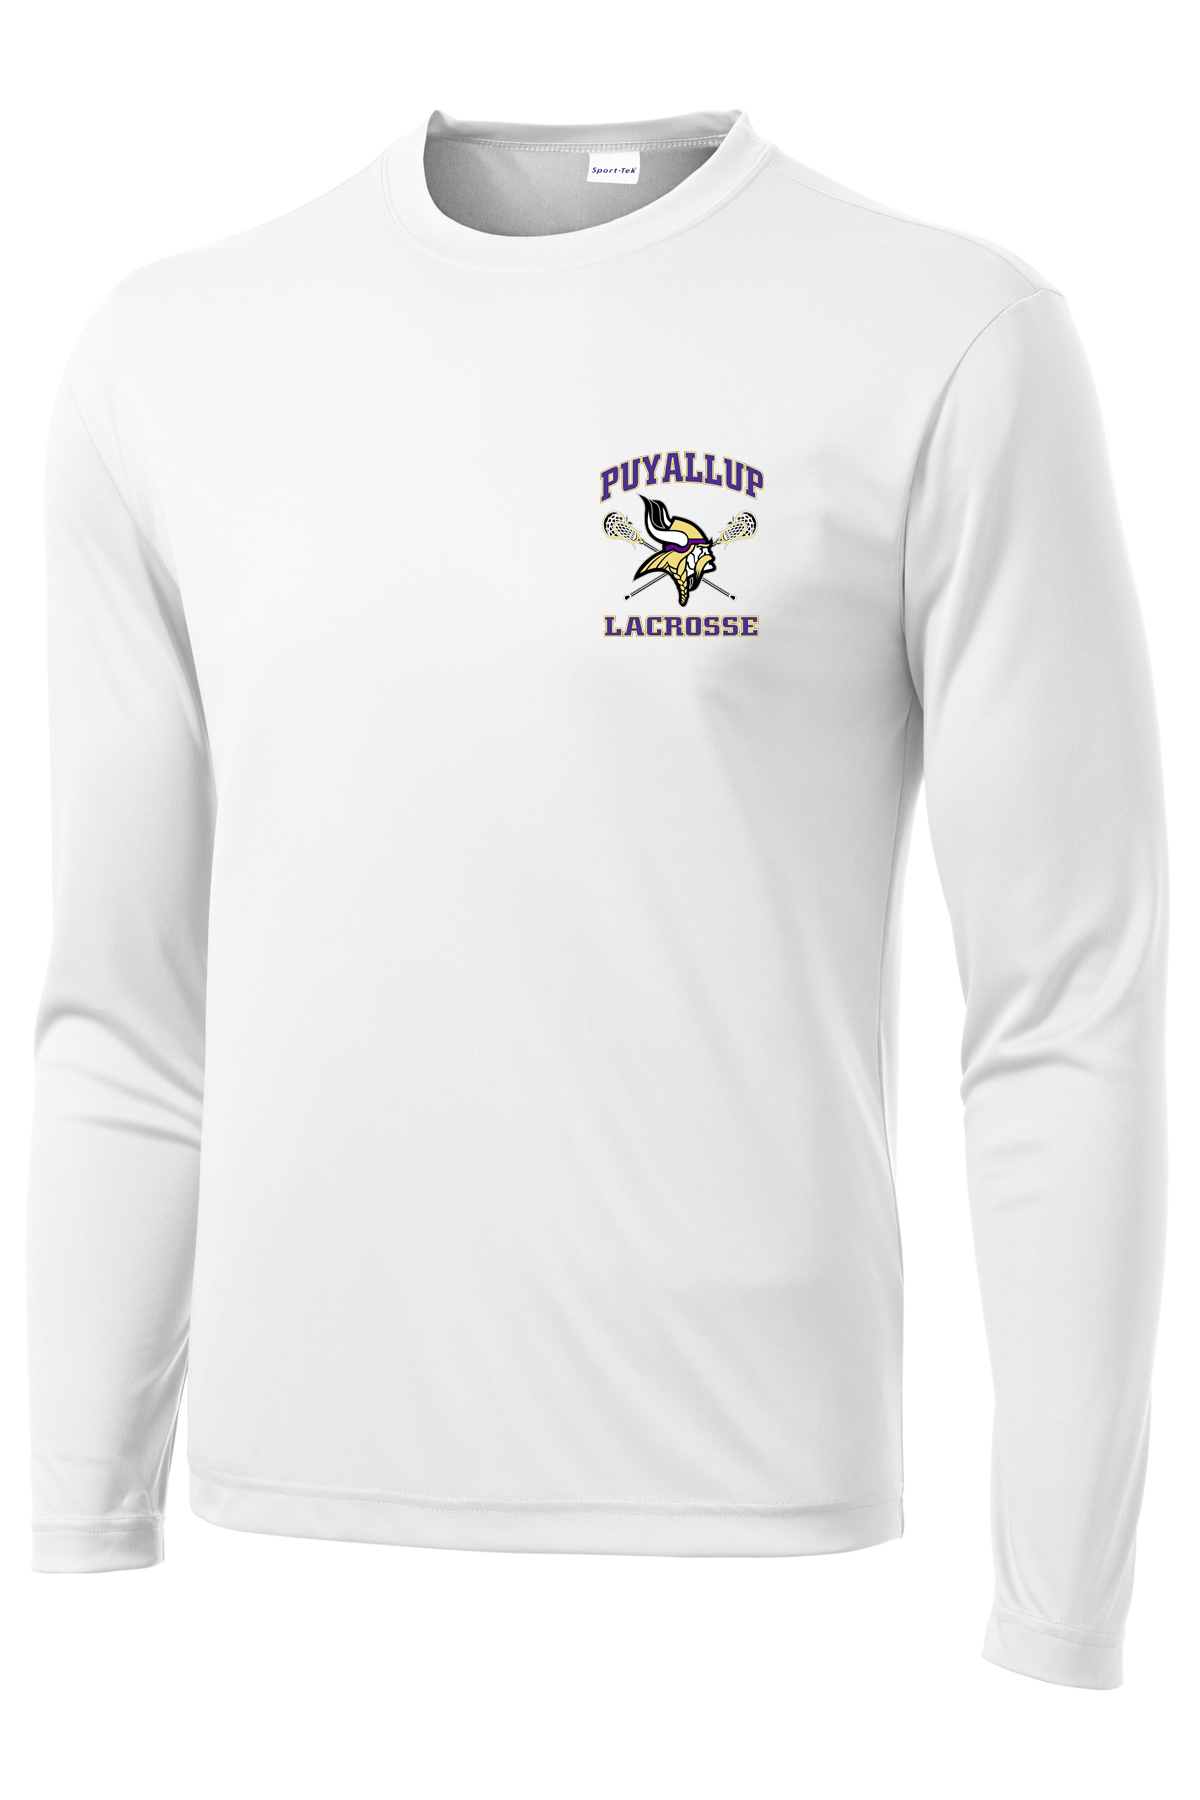 Puyallup Lacrosse White Long Sleeve Performance Shirt